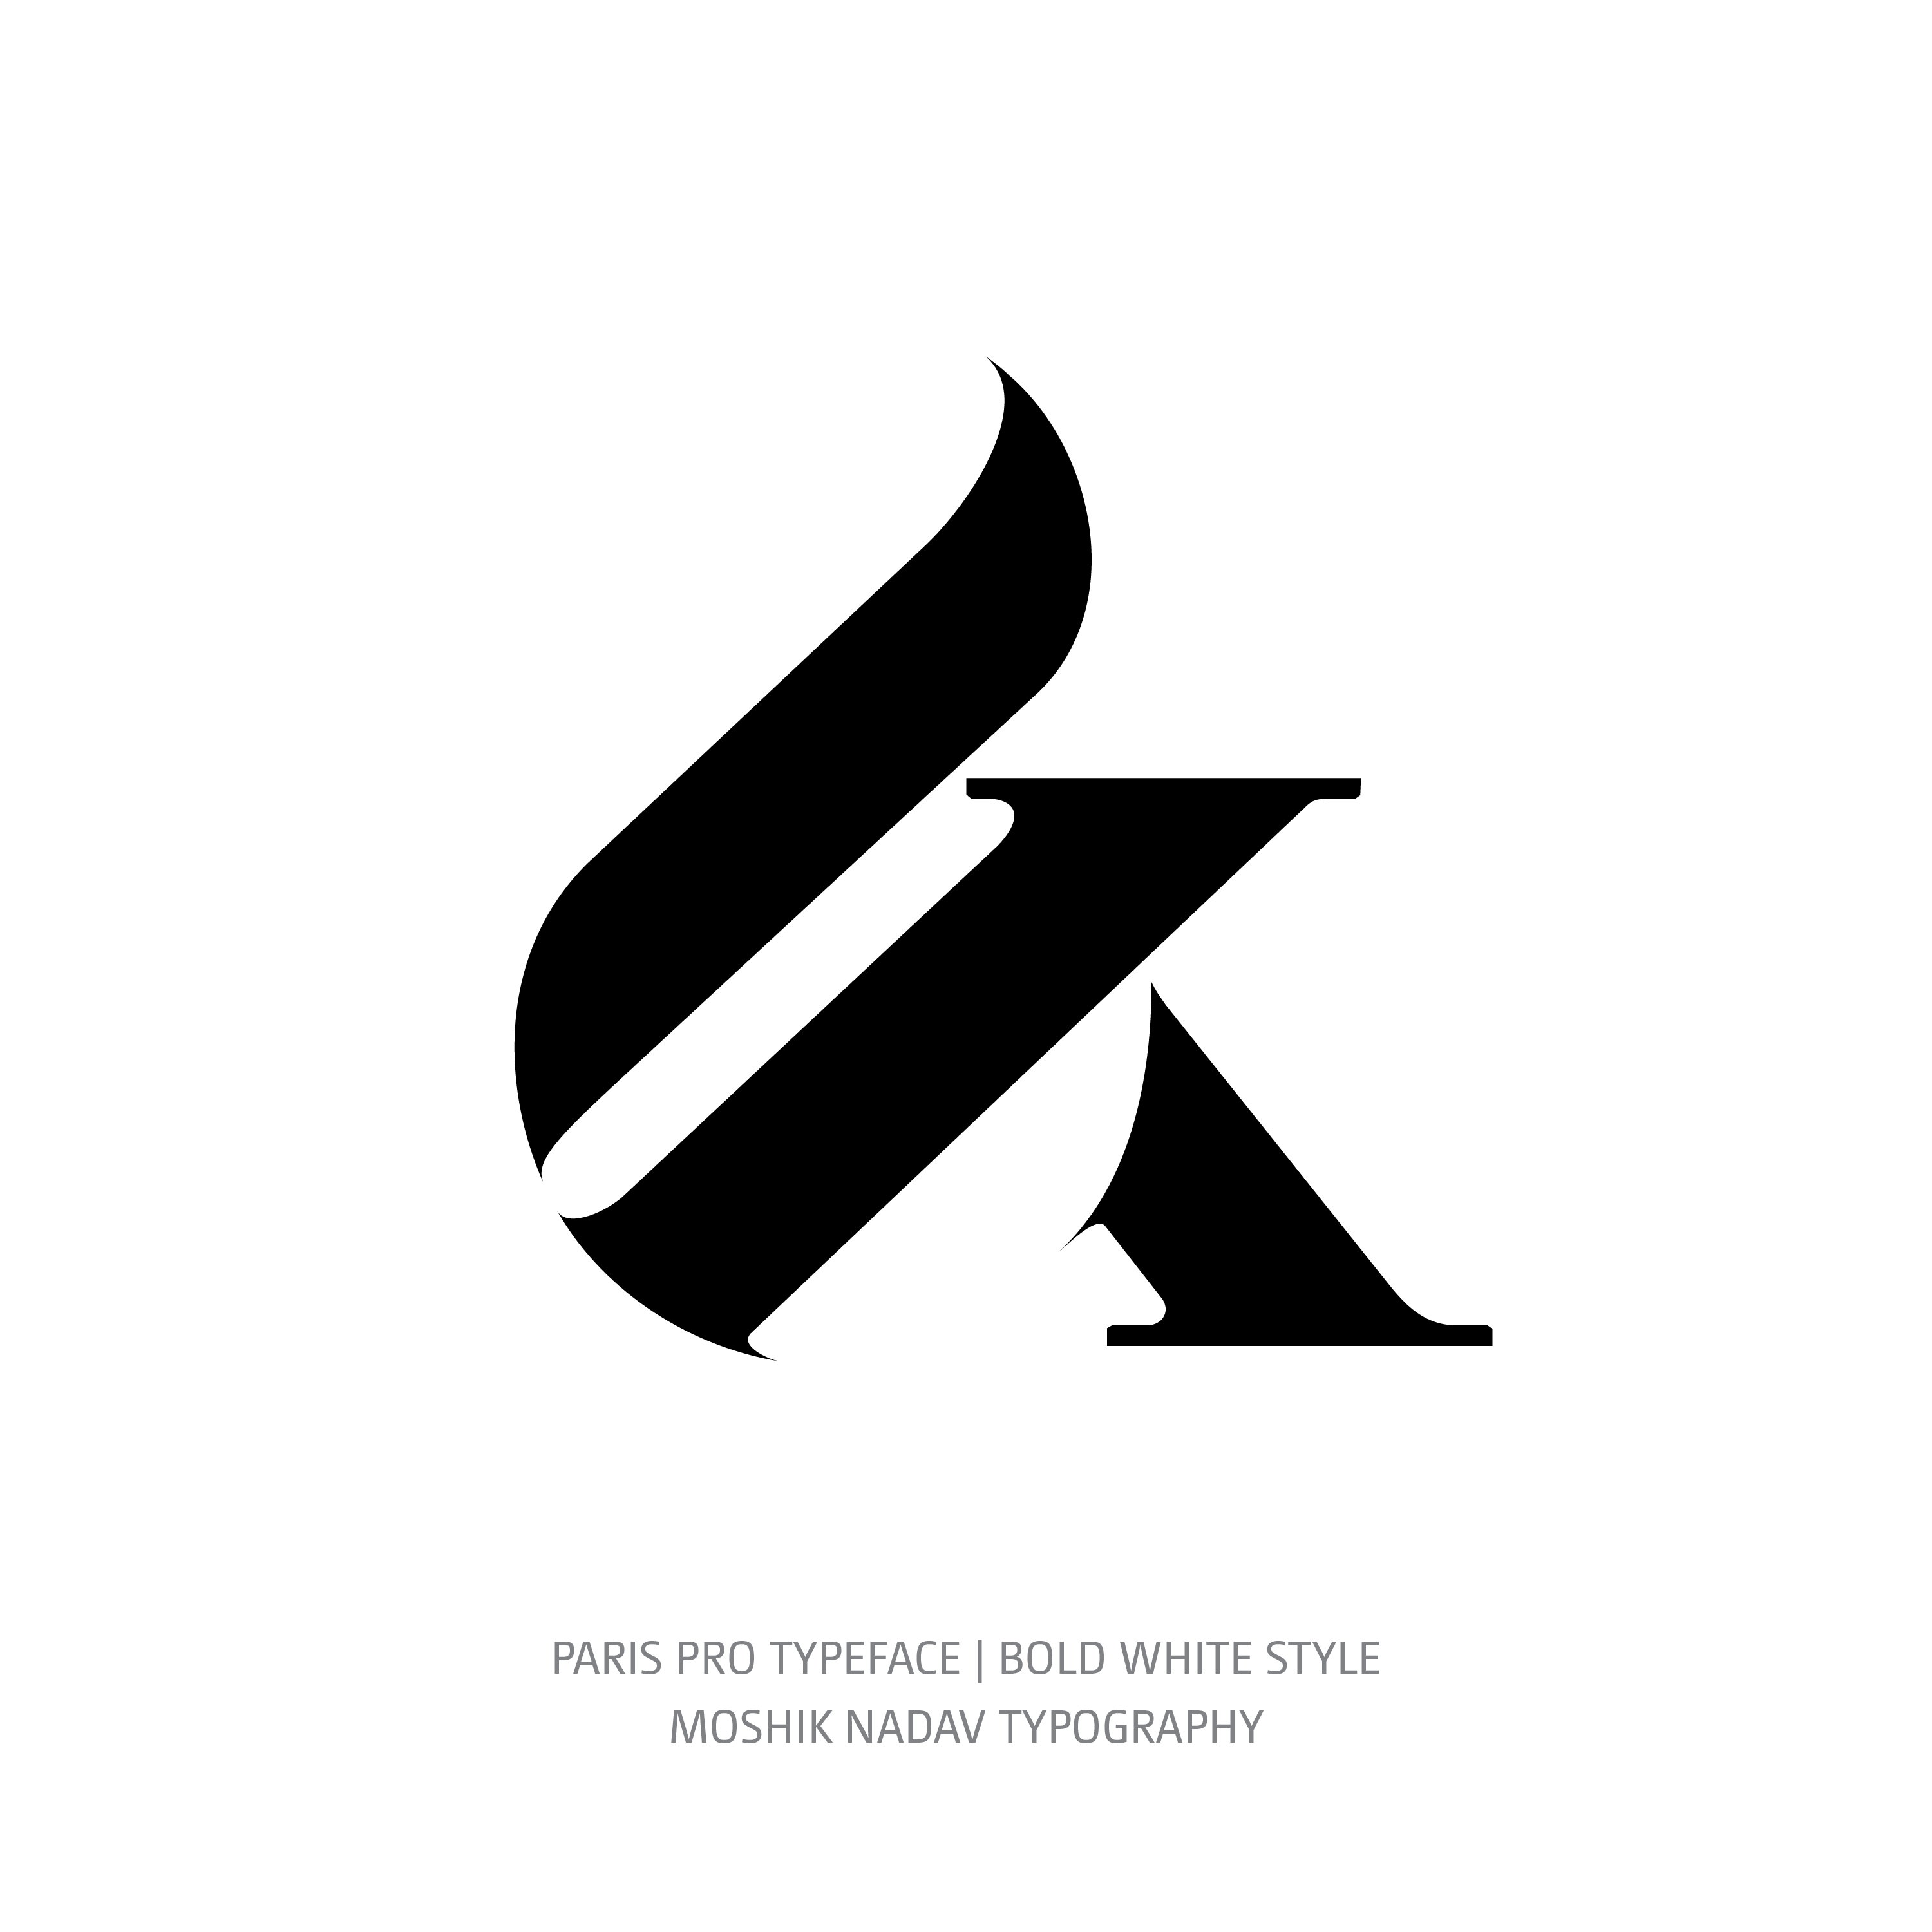 Paris Pro Typeface Bold White ampersand